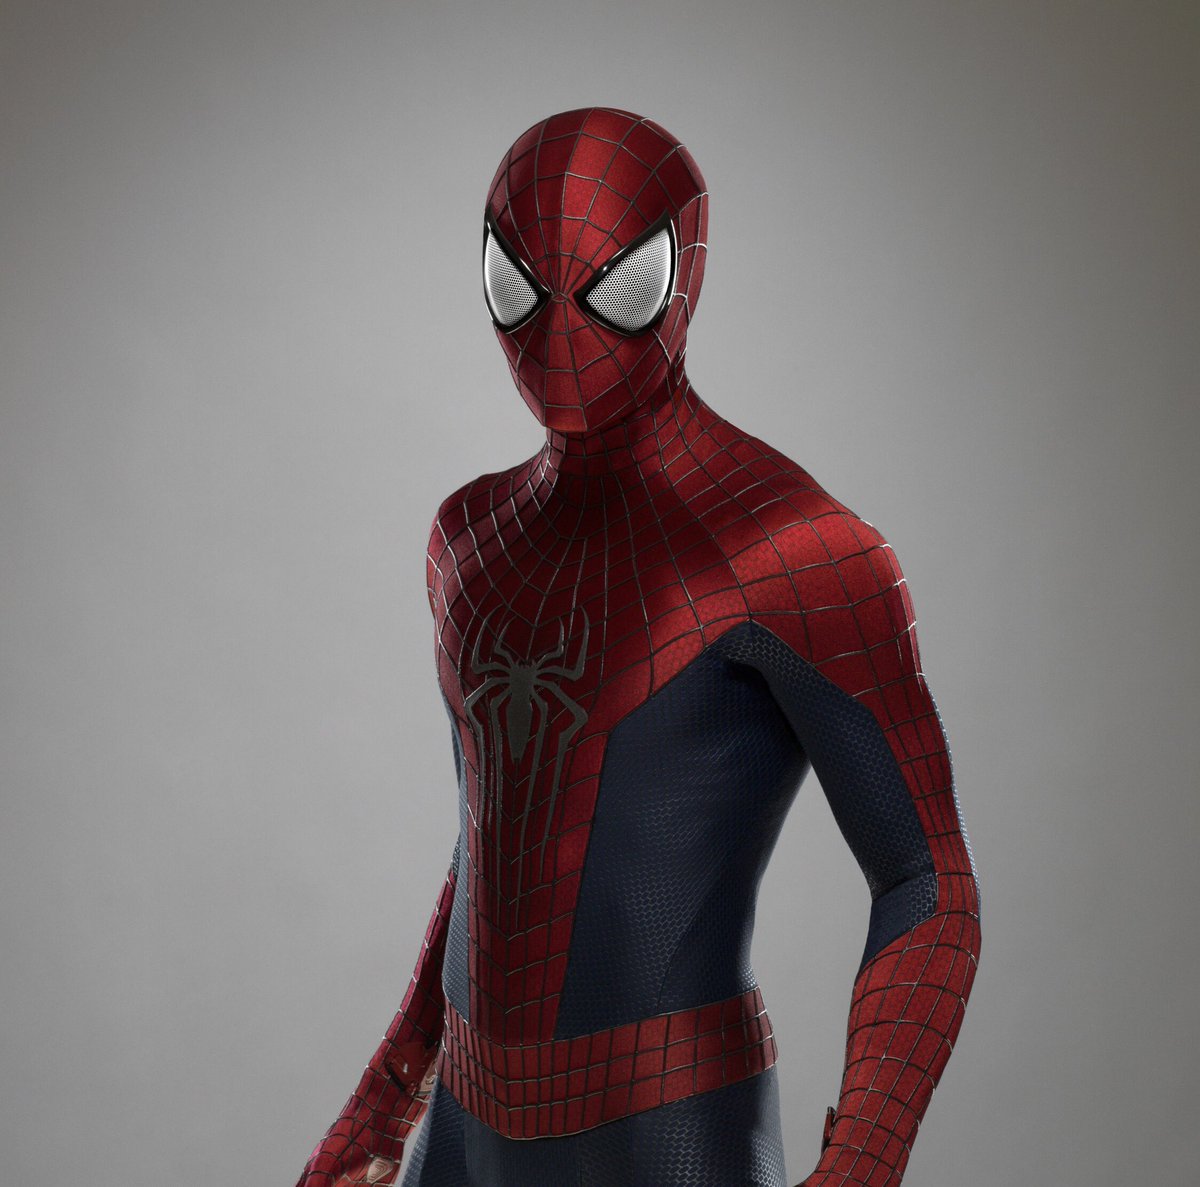 RT @battisonisbest: Andrew is a better Spider-Man than iron man Jr https://t.co/Bh7H5eH7gt